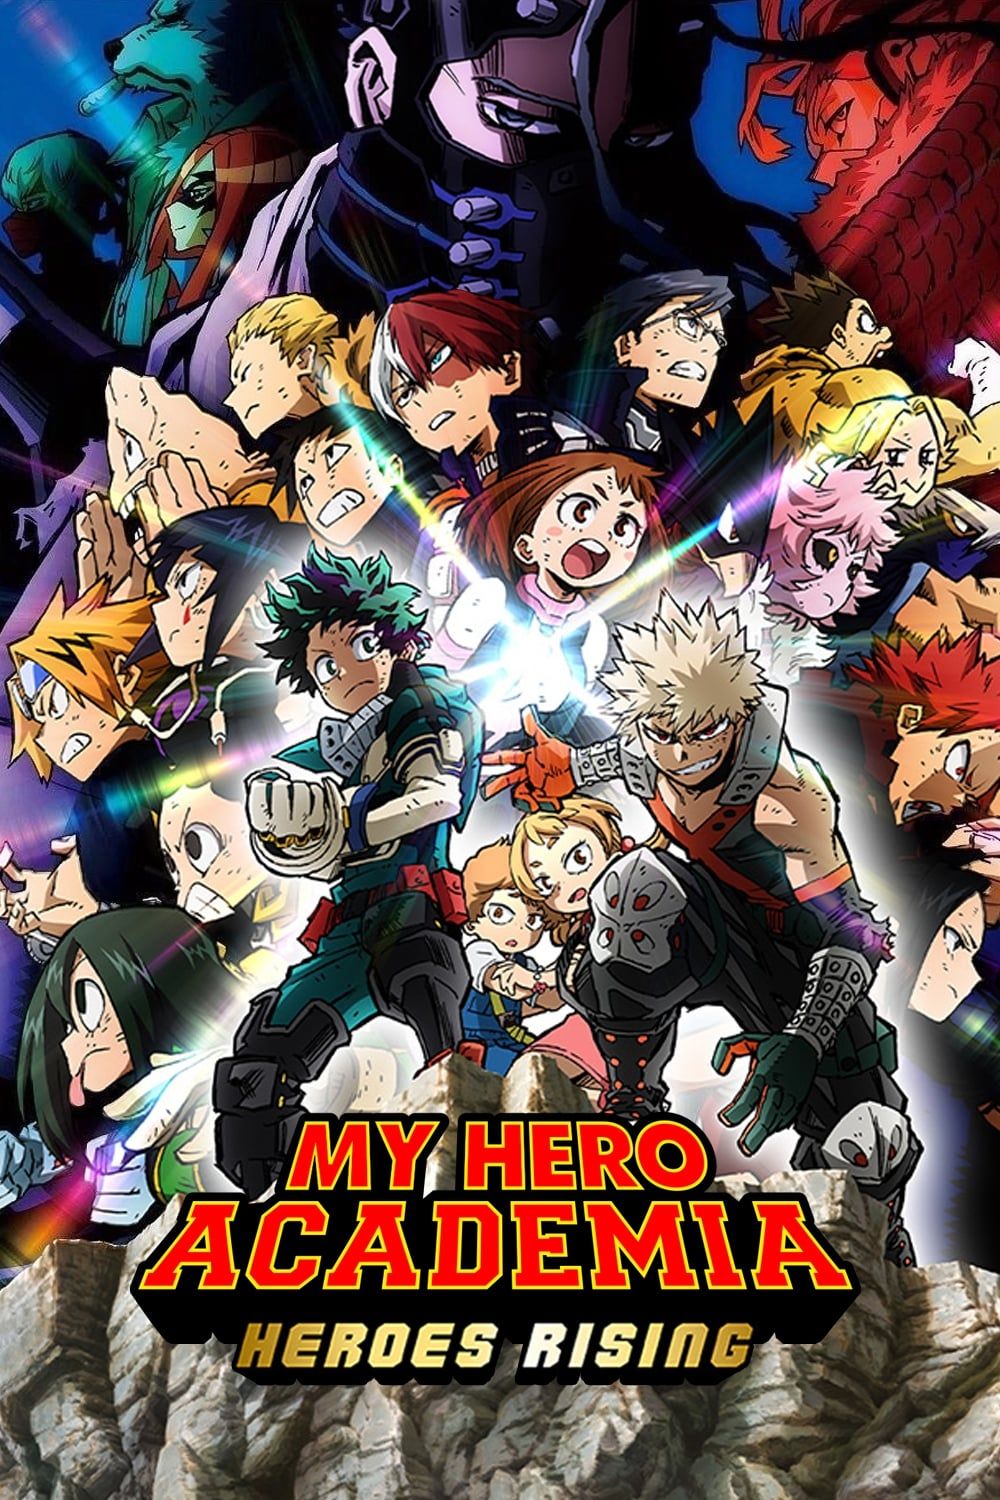 My Hero Academia The Movie: World Heroes' Mission Anime Casts Ryō Yoshizawa  as Original Character - News - Anime News Network